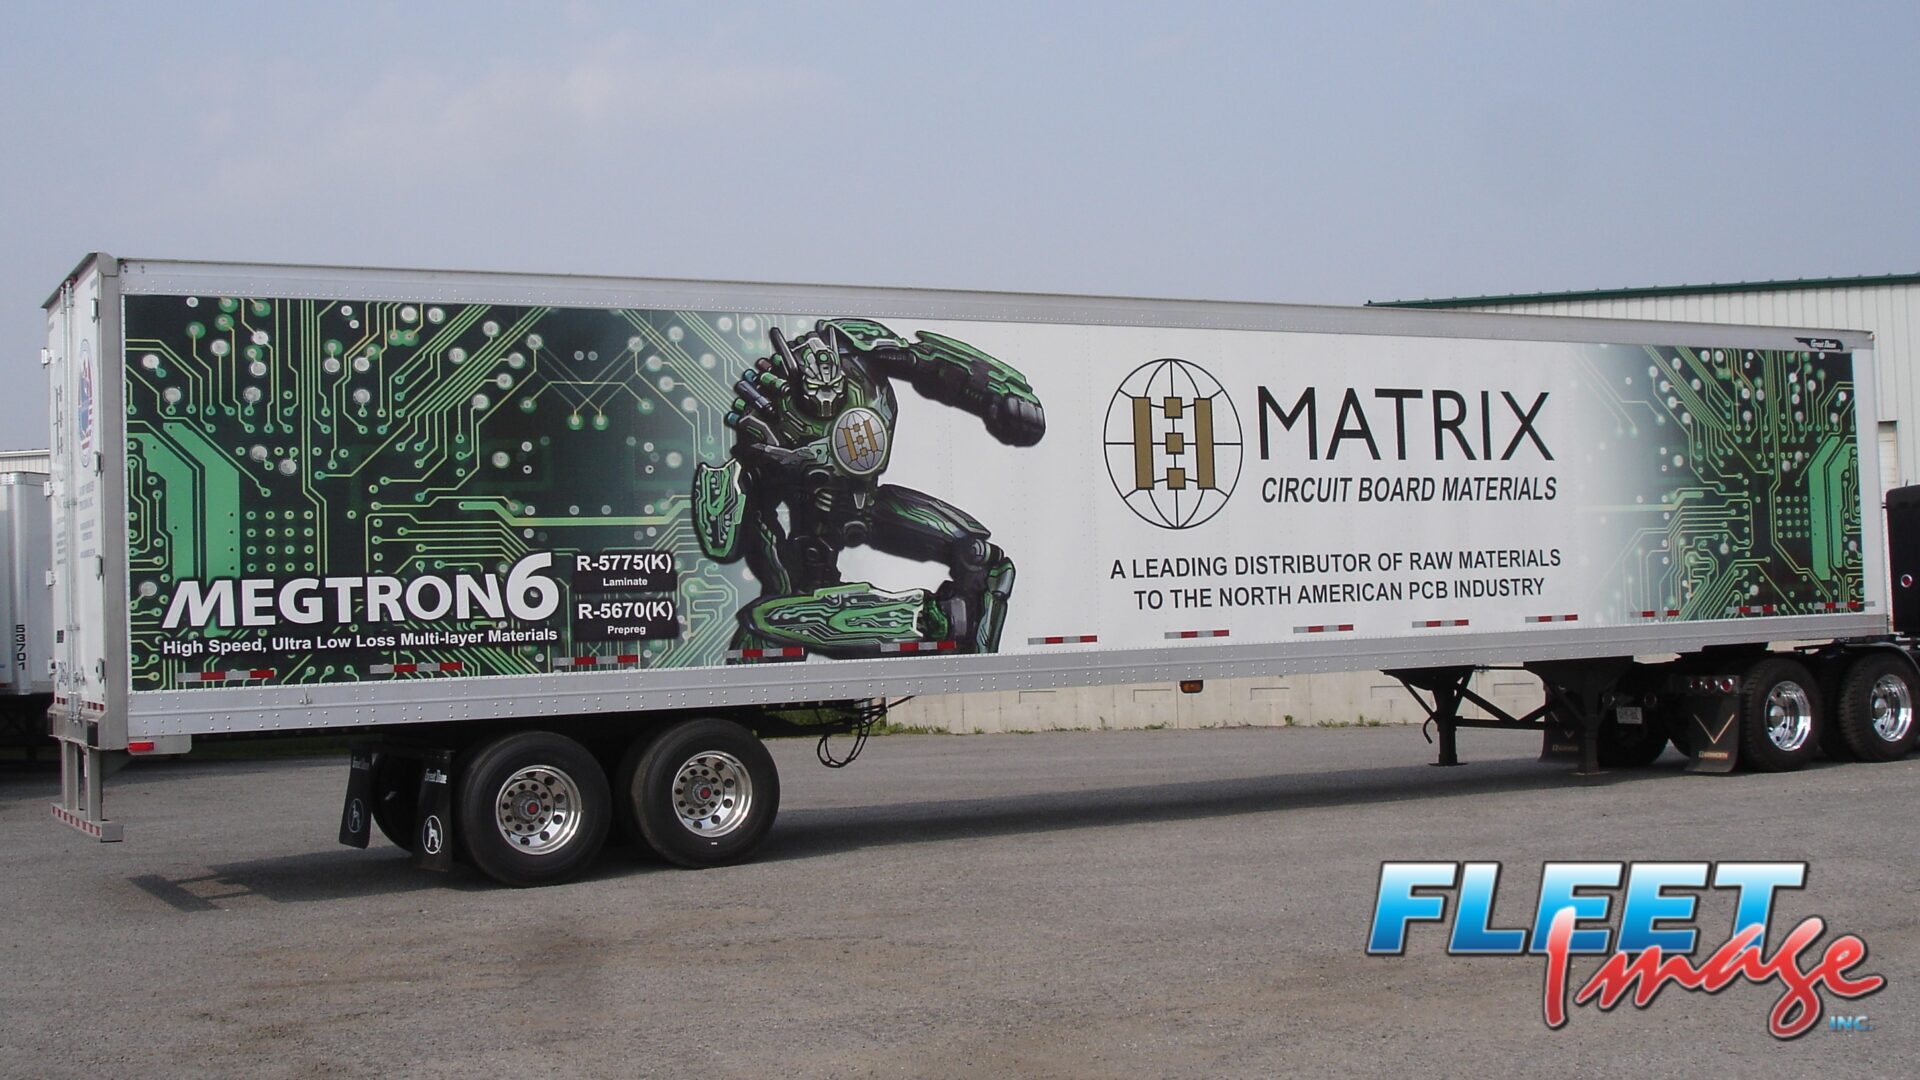 Matrix Circuit Board Materials decal sticker on a truck